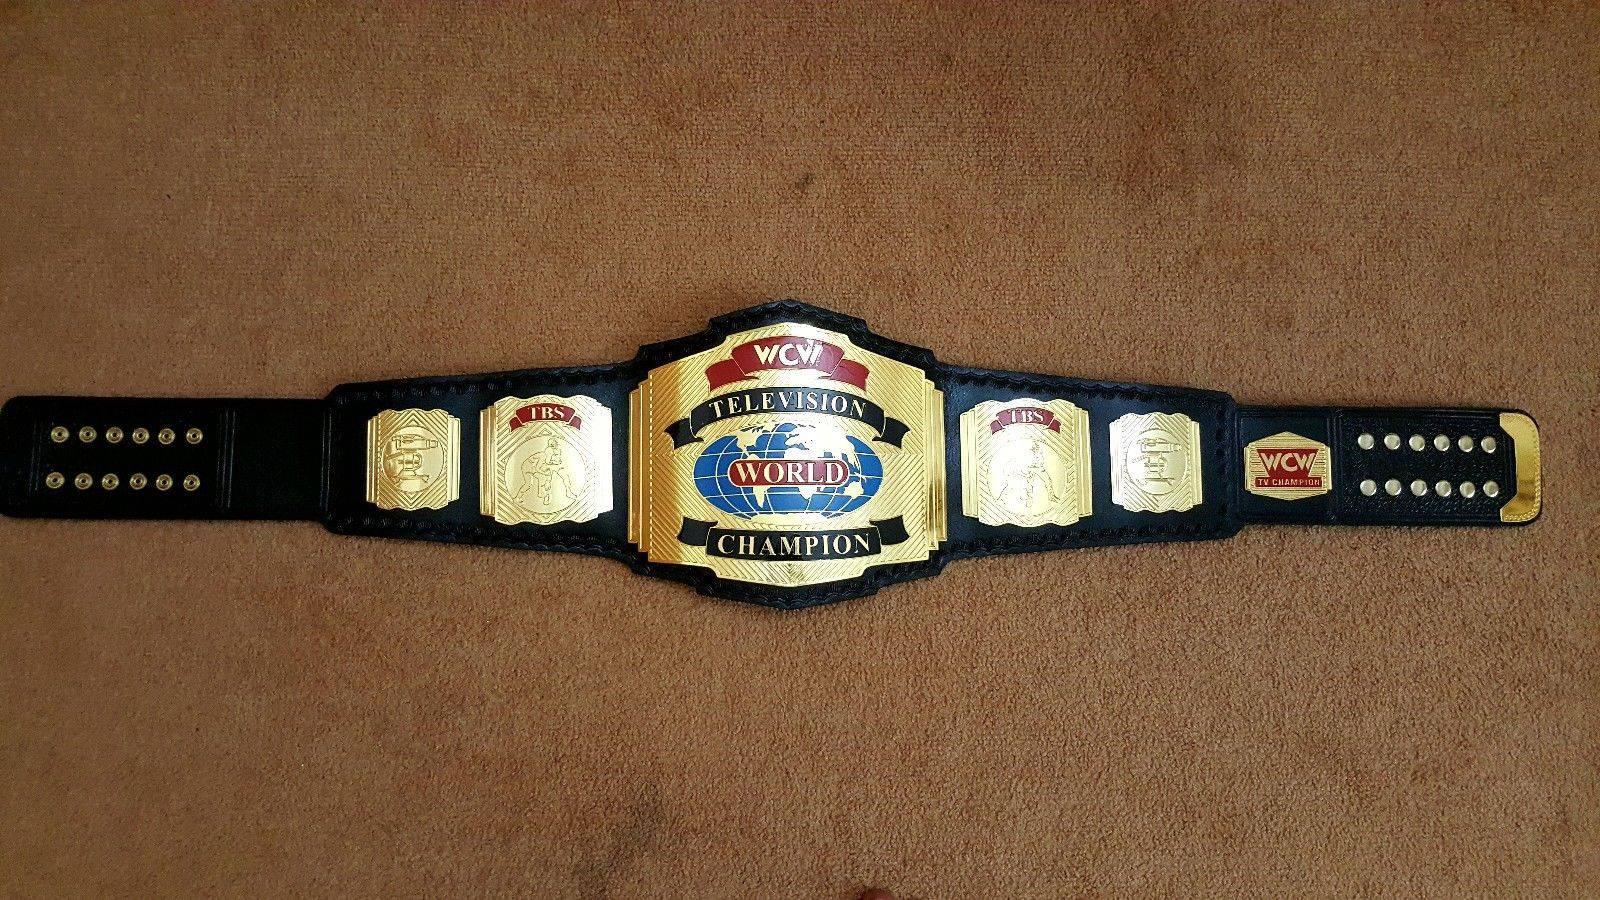 WCW WORLD TELEVISION Brass Championship Belt - Zees Belts